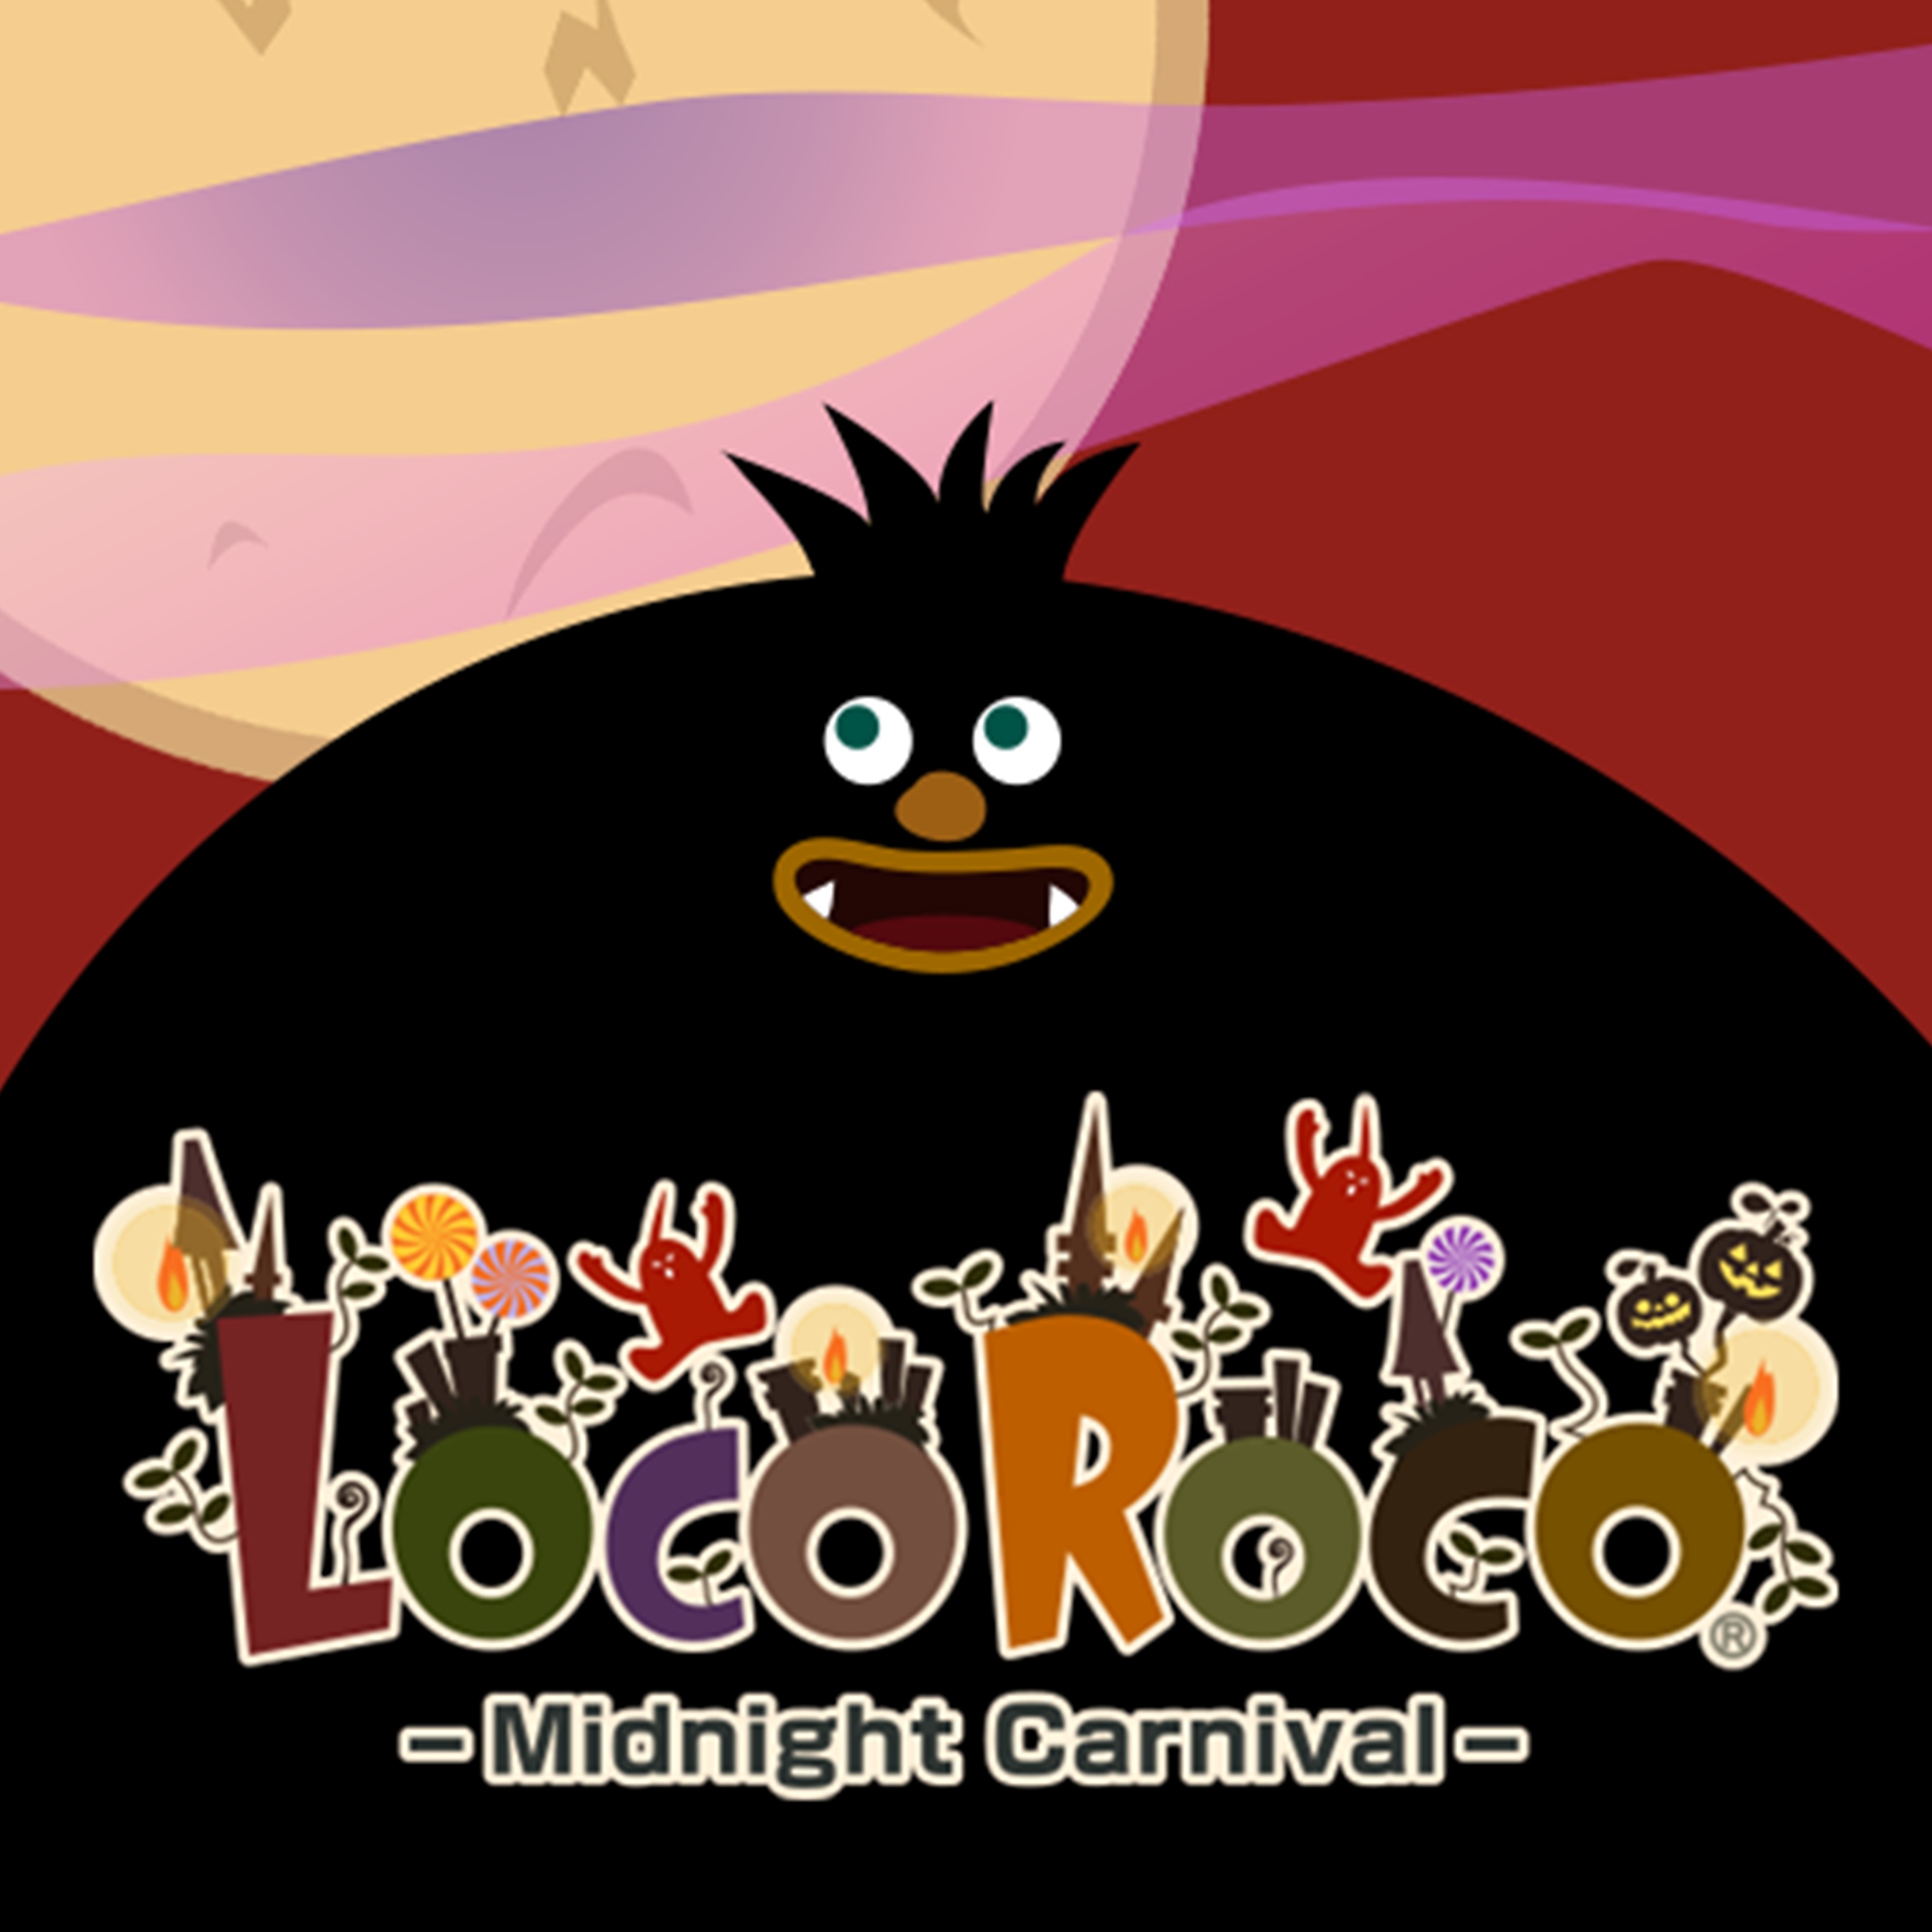 LocoRoco Midnight carnival εικαστικό που δείχνει ένα μεγάλο μαύρο καρτούν